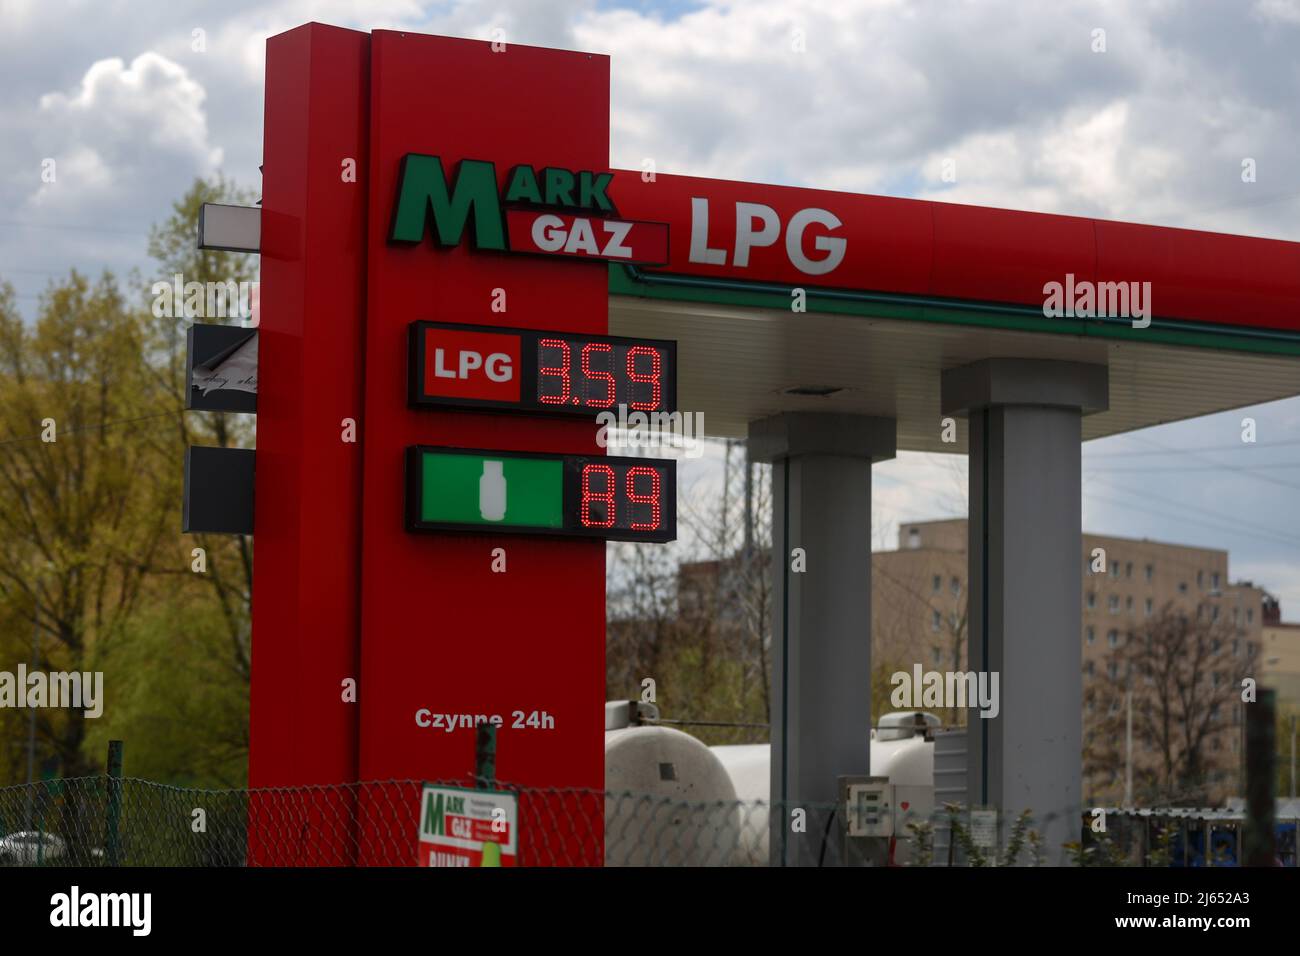 Gas station in Warsaw, Poland Stock Photo - Alamy